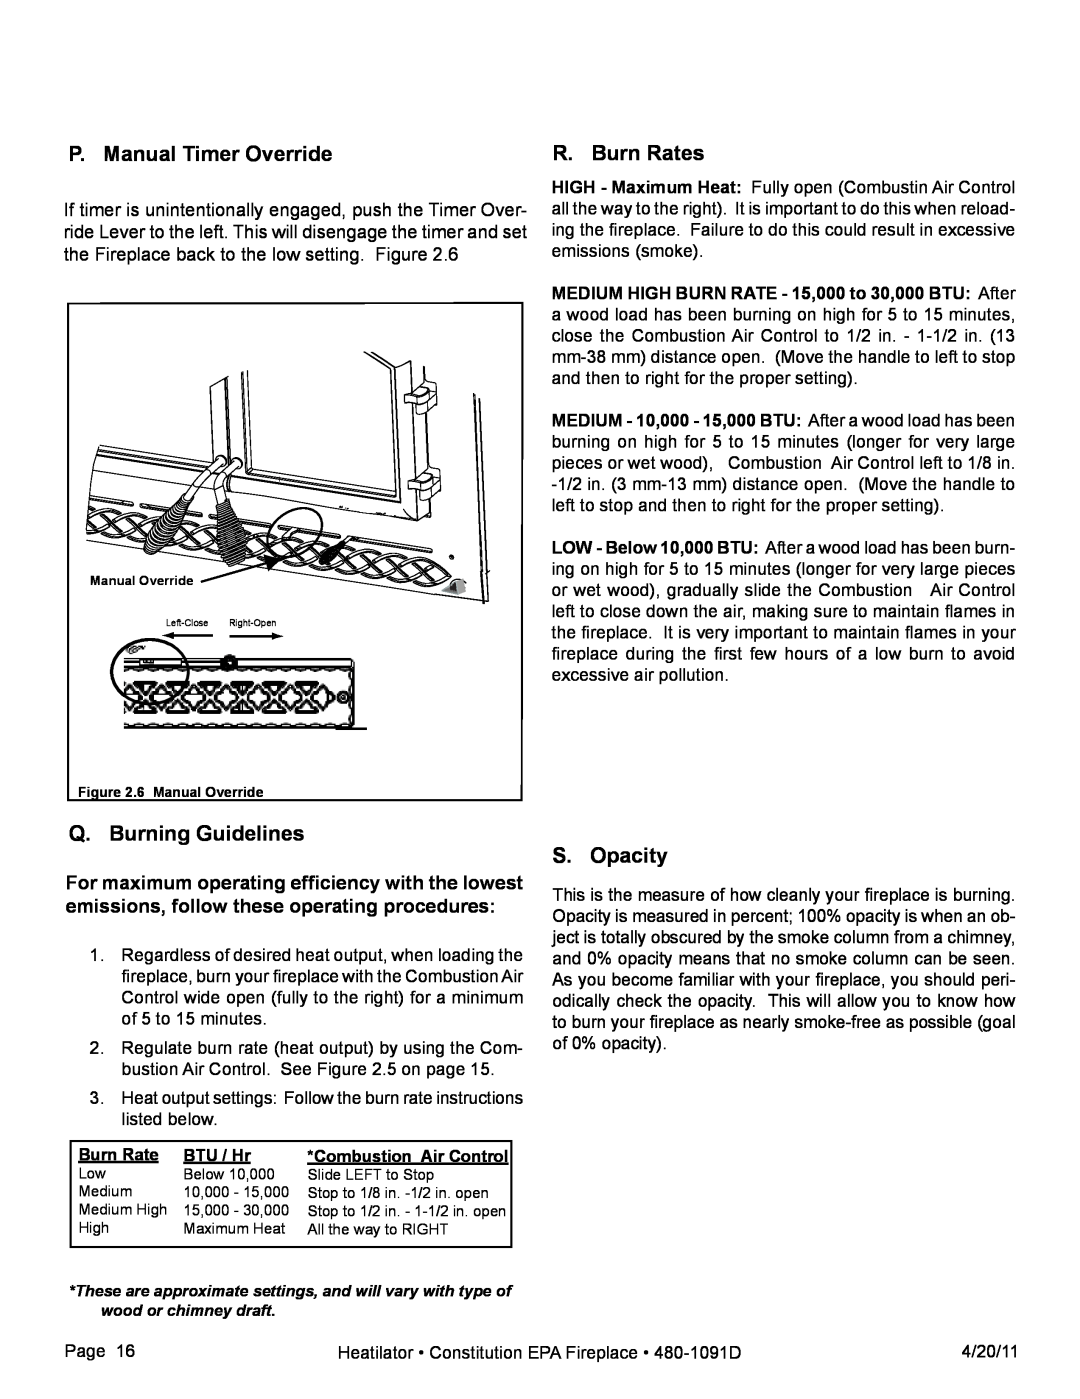 Heatiator C40 P. Manual Timer Override, R. Burn Rates, Q. Burning Guidelines, S. Opacity, BTU / Hr, Combustion Air Control 